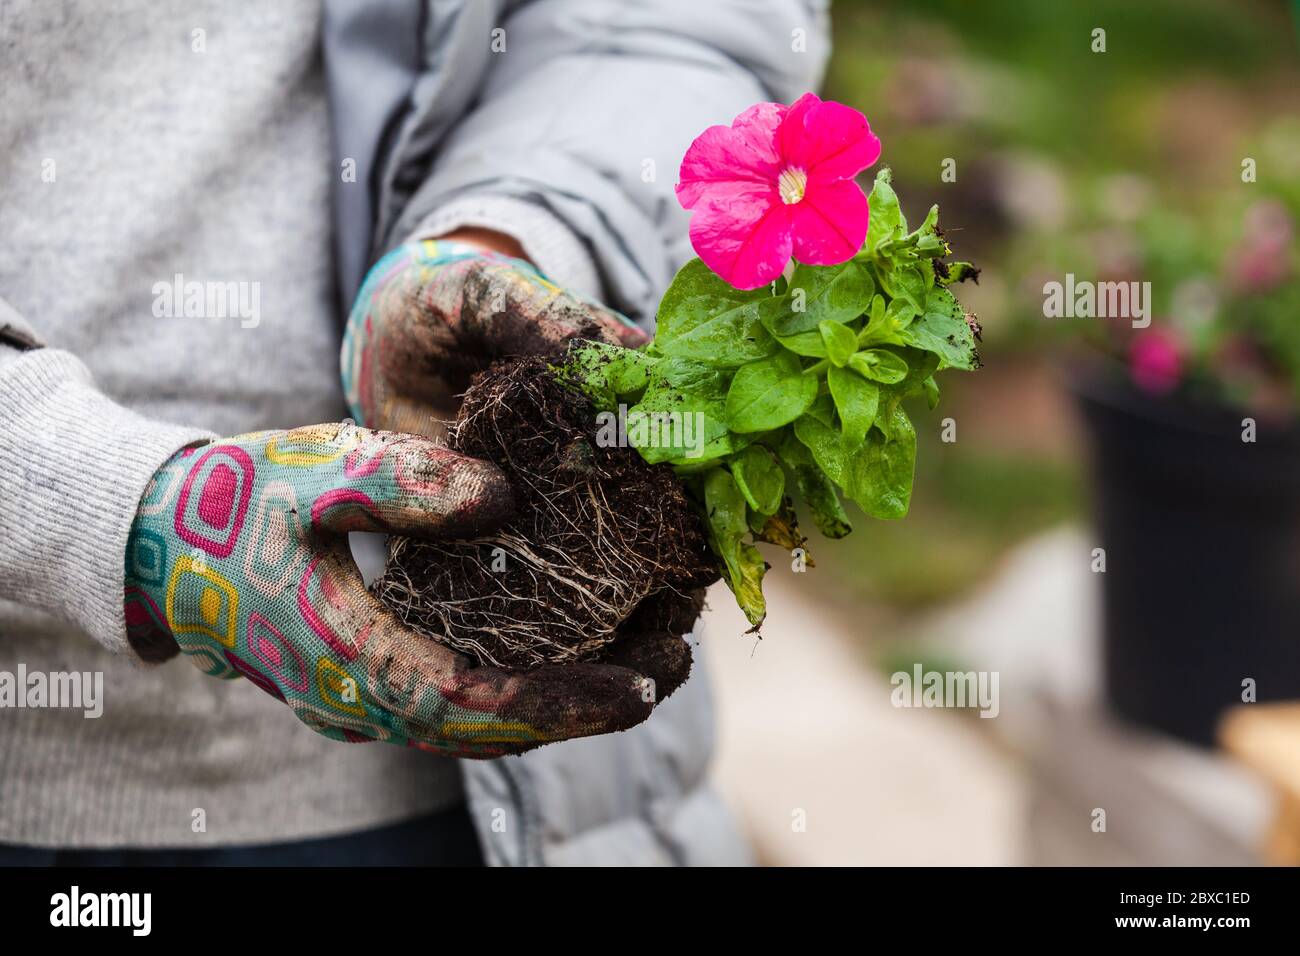 Petunia Sämling mit rosa Blume ist in den Händen Gärtner, Nahaufnahme Foto mit selektivem Fokus Stockfoto